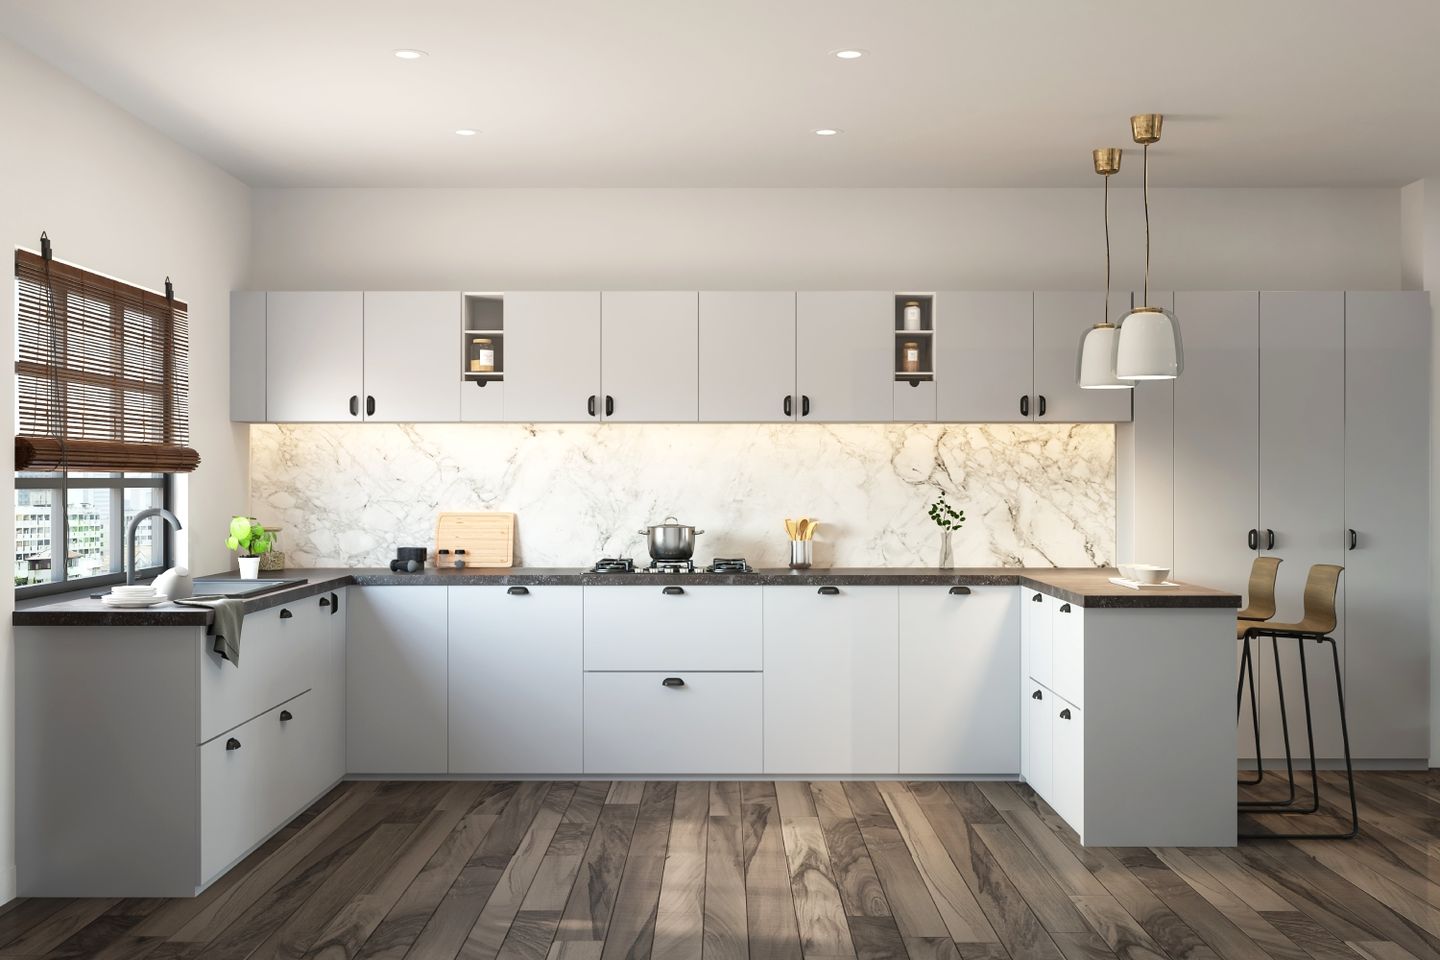 Spacious U-Shaped White Kitchen Design With White Marble Backsplash And Wooden Flooring - Livspace